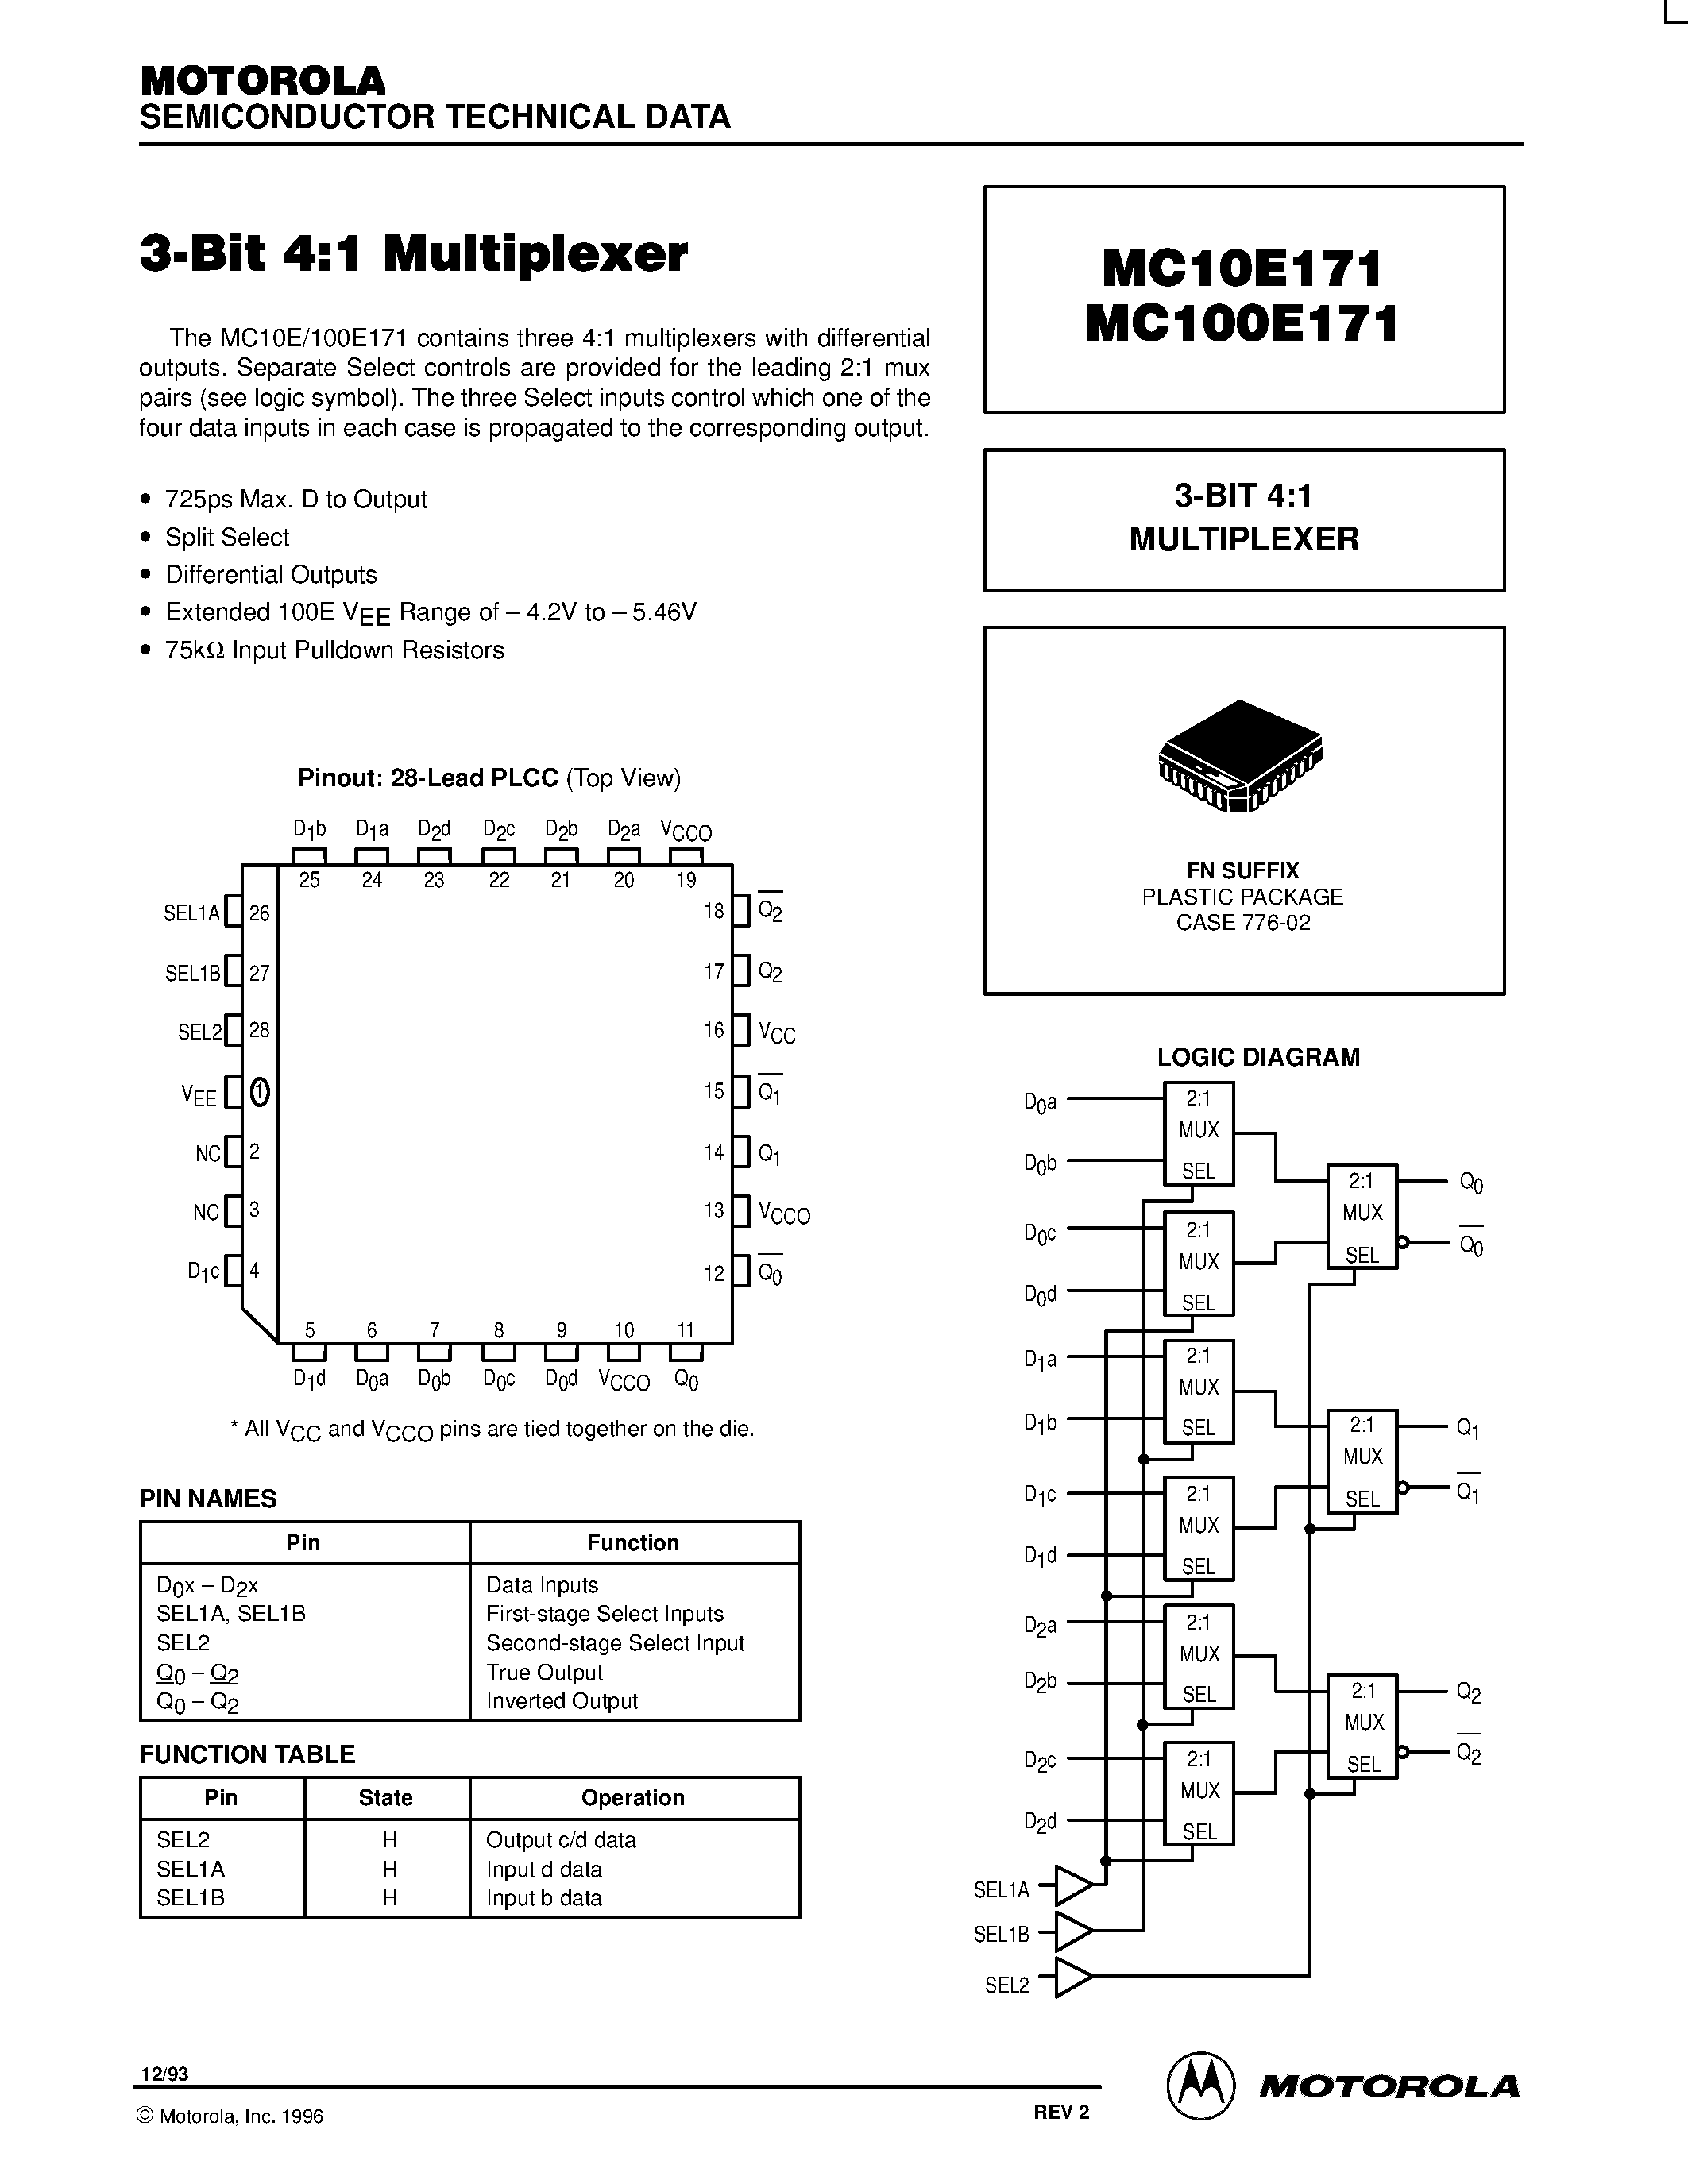 Datasheet MC100E171FN - 3-BIT 4:1 MULTIPLEXER page 1